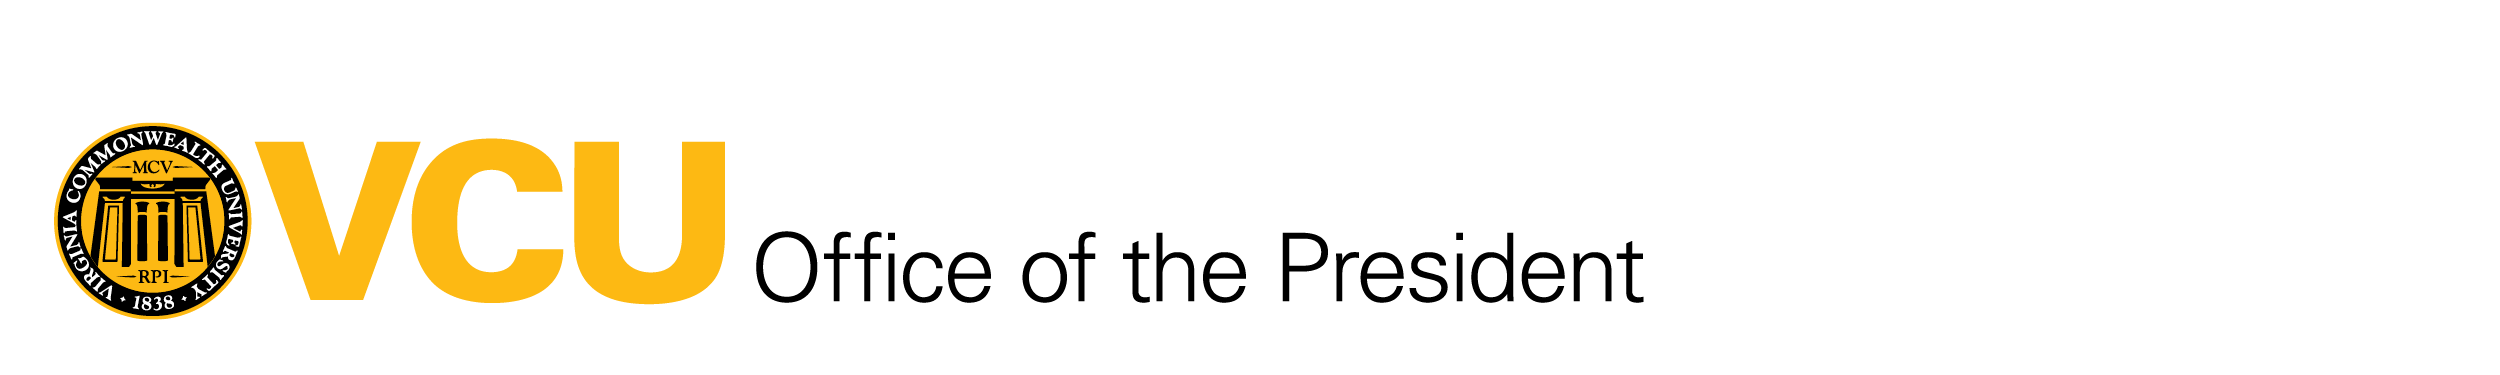 VCU brandmark logo https://president.vcu.edu